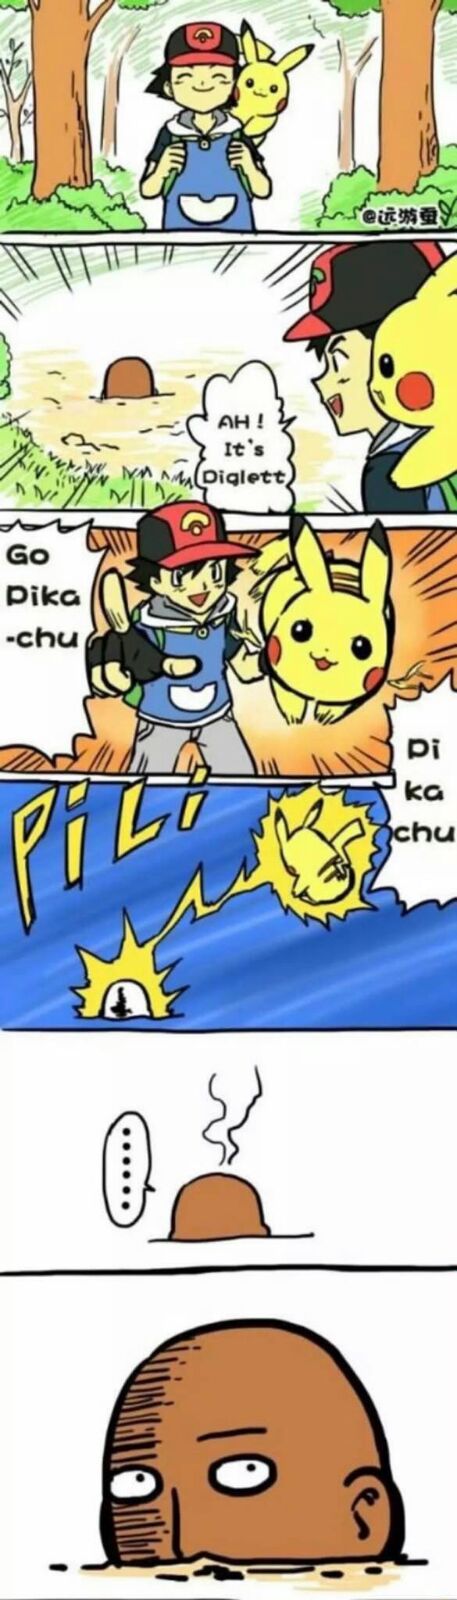 R.I.P Pikachu :,v - meme